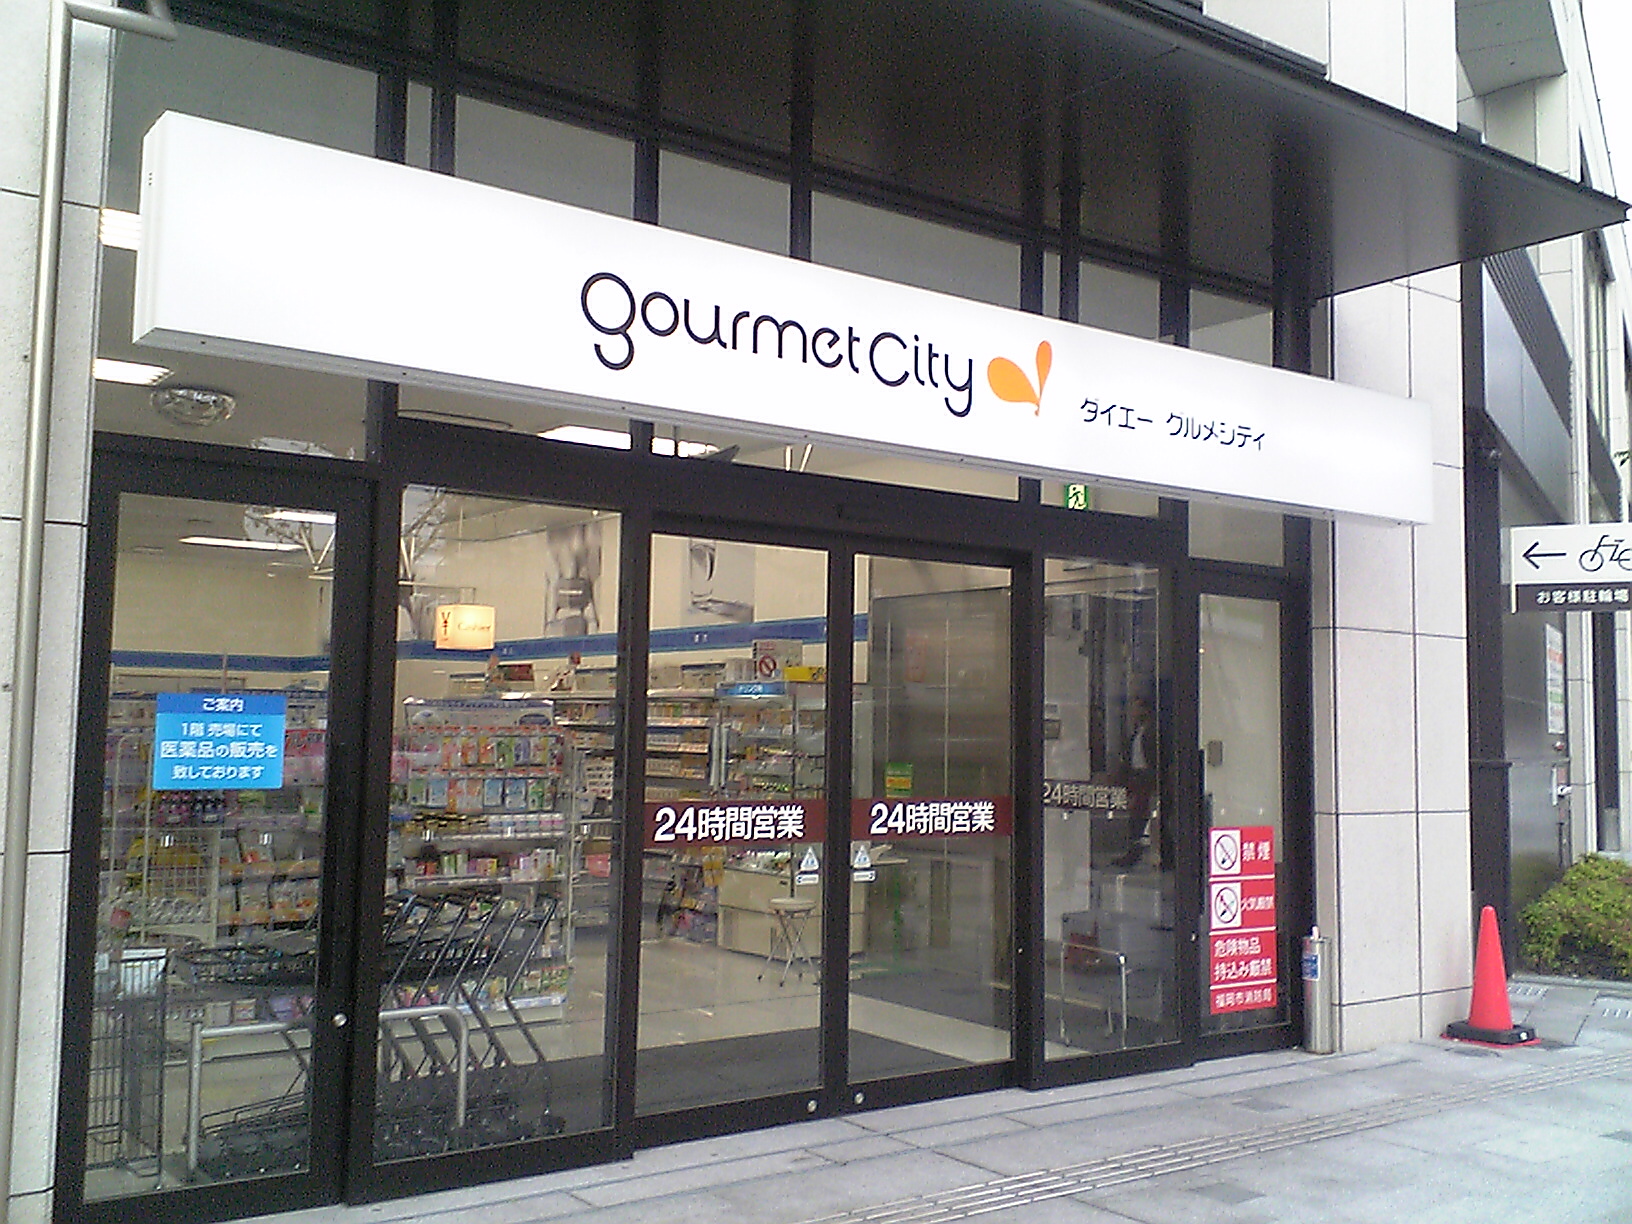 Supermarket. 501m to Daiei Gourmet City Shin-Nagata shop (super)